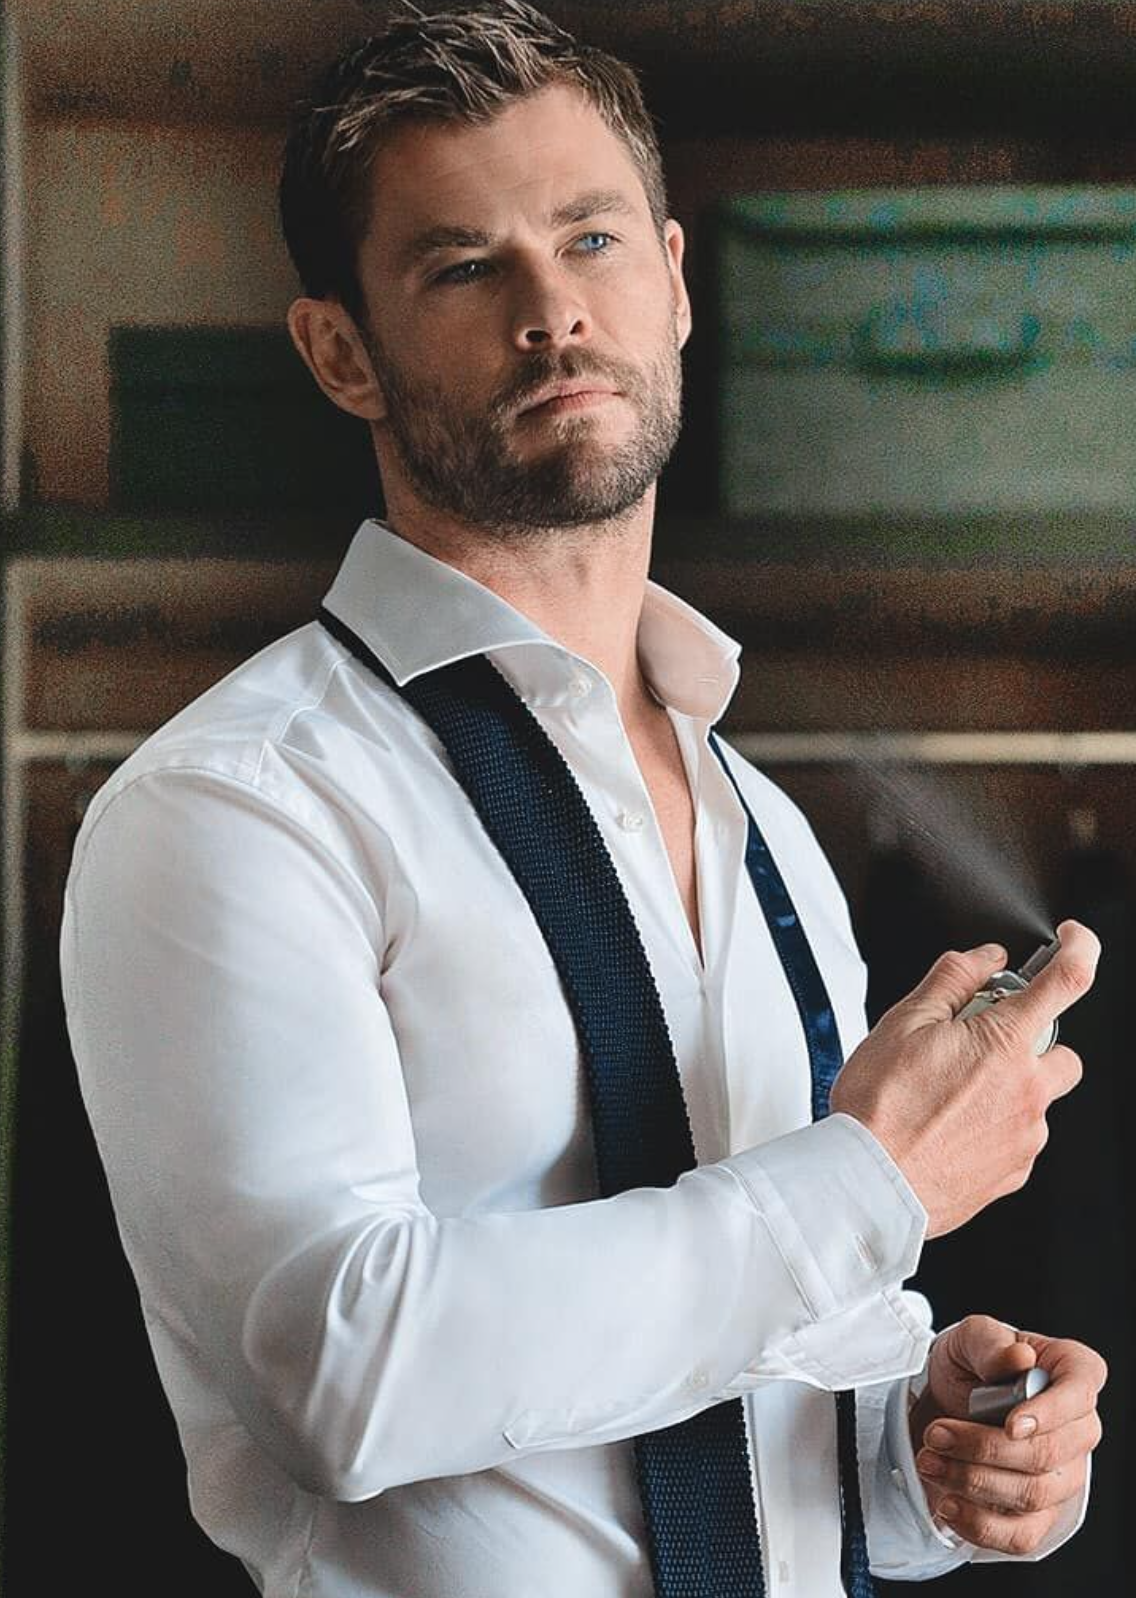 Chris Hemsworth applying cologne